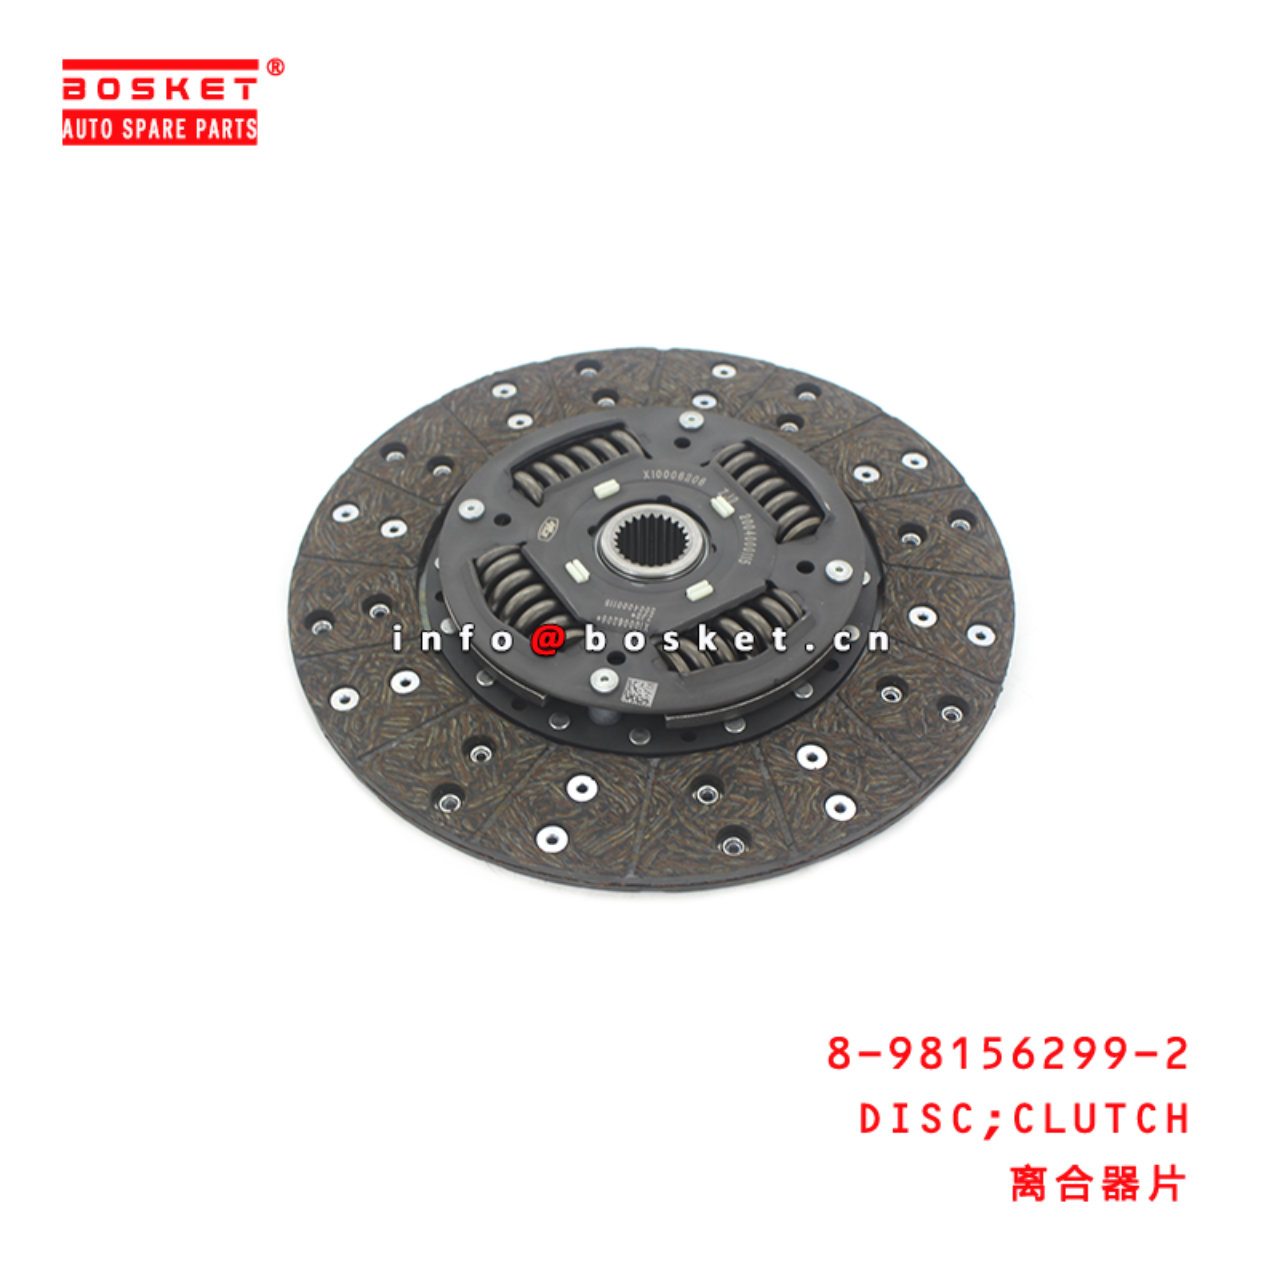 8-98156299-2 Clutch Disc 8981562992 Suitable for ISUZU TFR